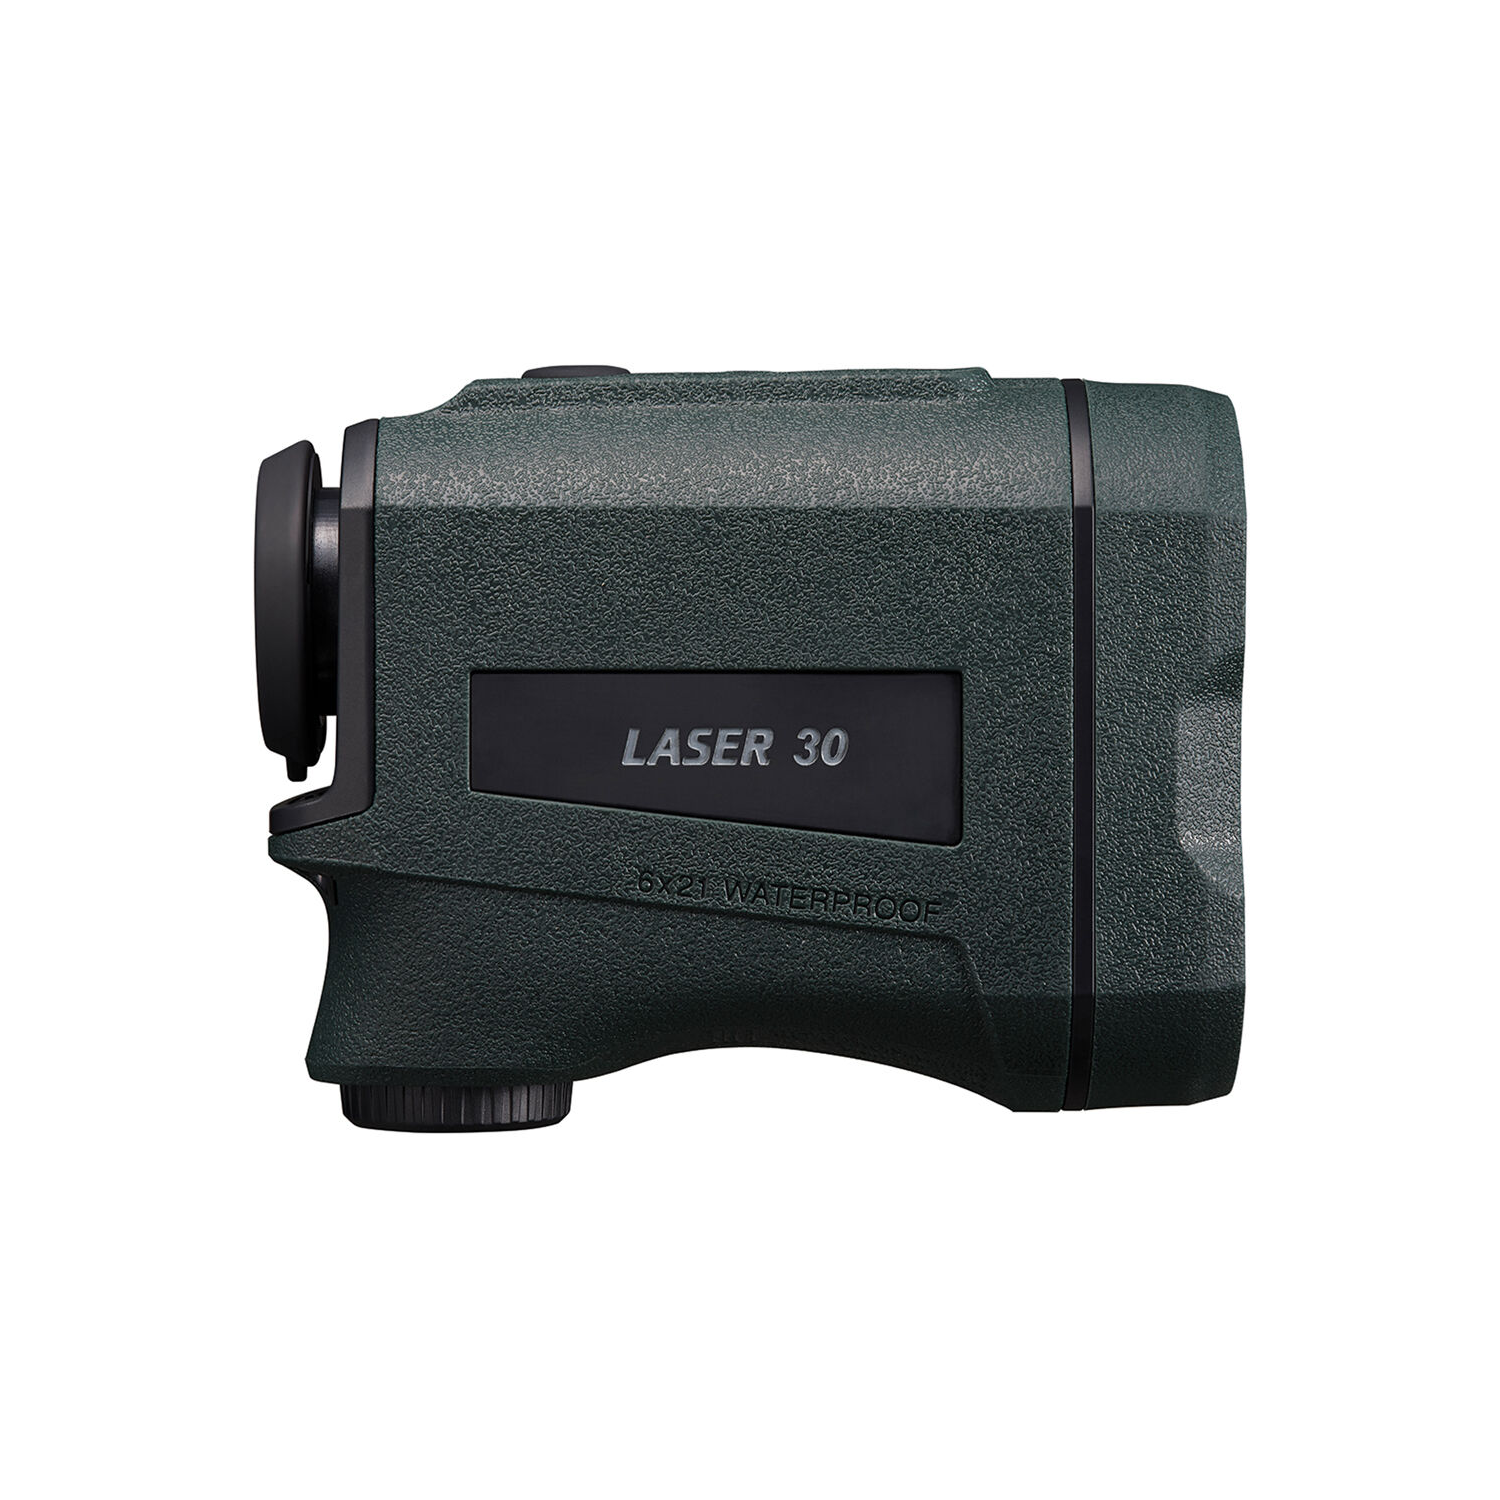 Nikon LASER 30 Laser Golf Rangefinder -  6x21 (8-1,600yds)